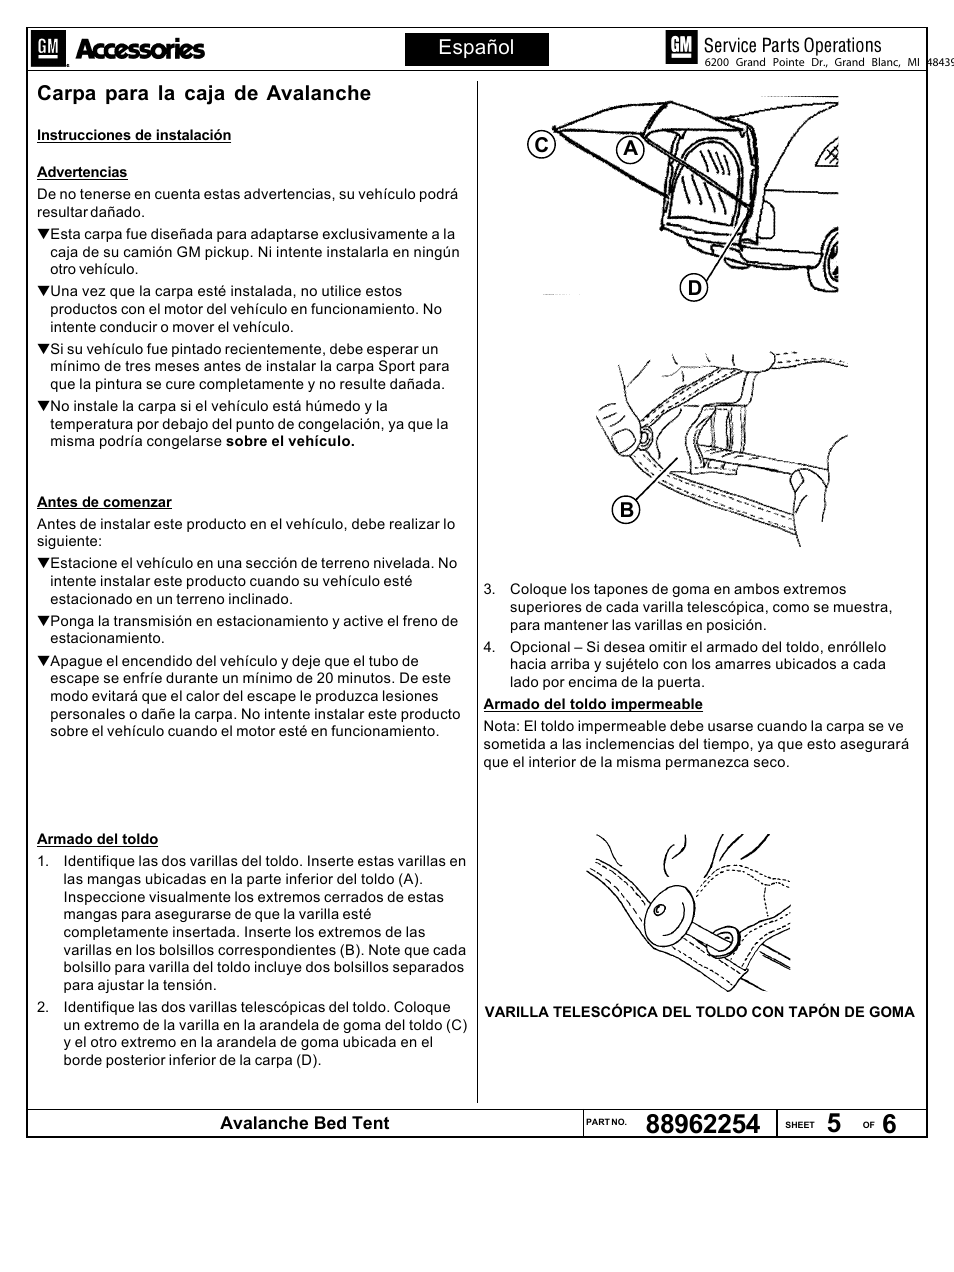 Avalacnhe awn instructions pg 5.pdf, Español carpa para la caja de  avalanche, Ca d b | Napier Avalanche Truck Tent User Manual | Page 5 / 6